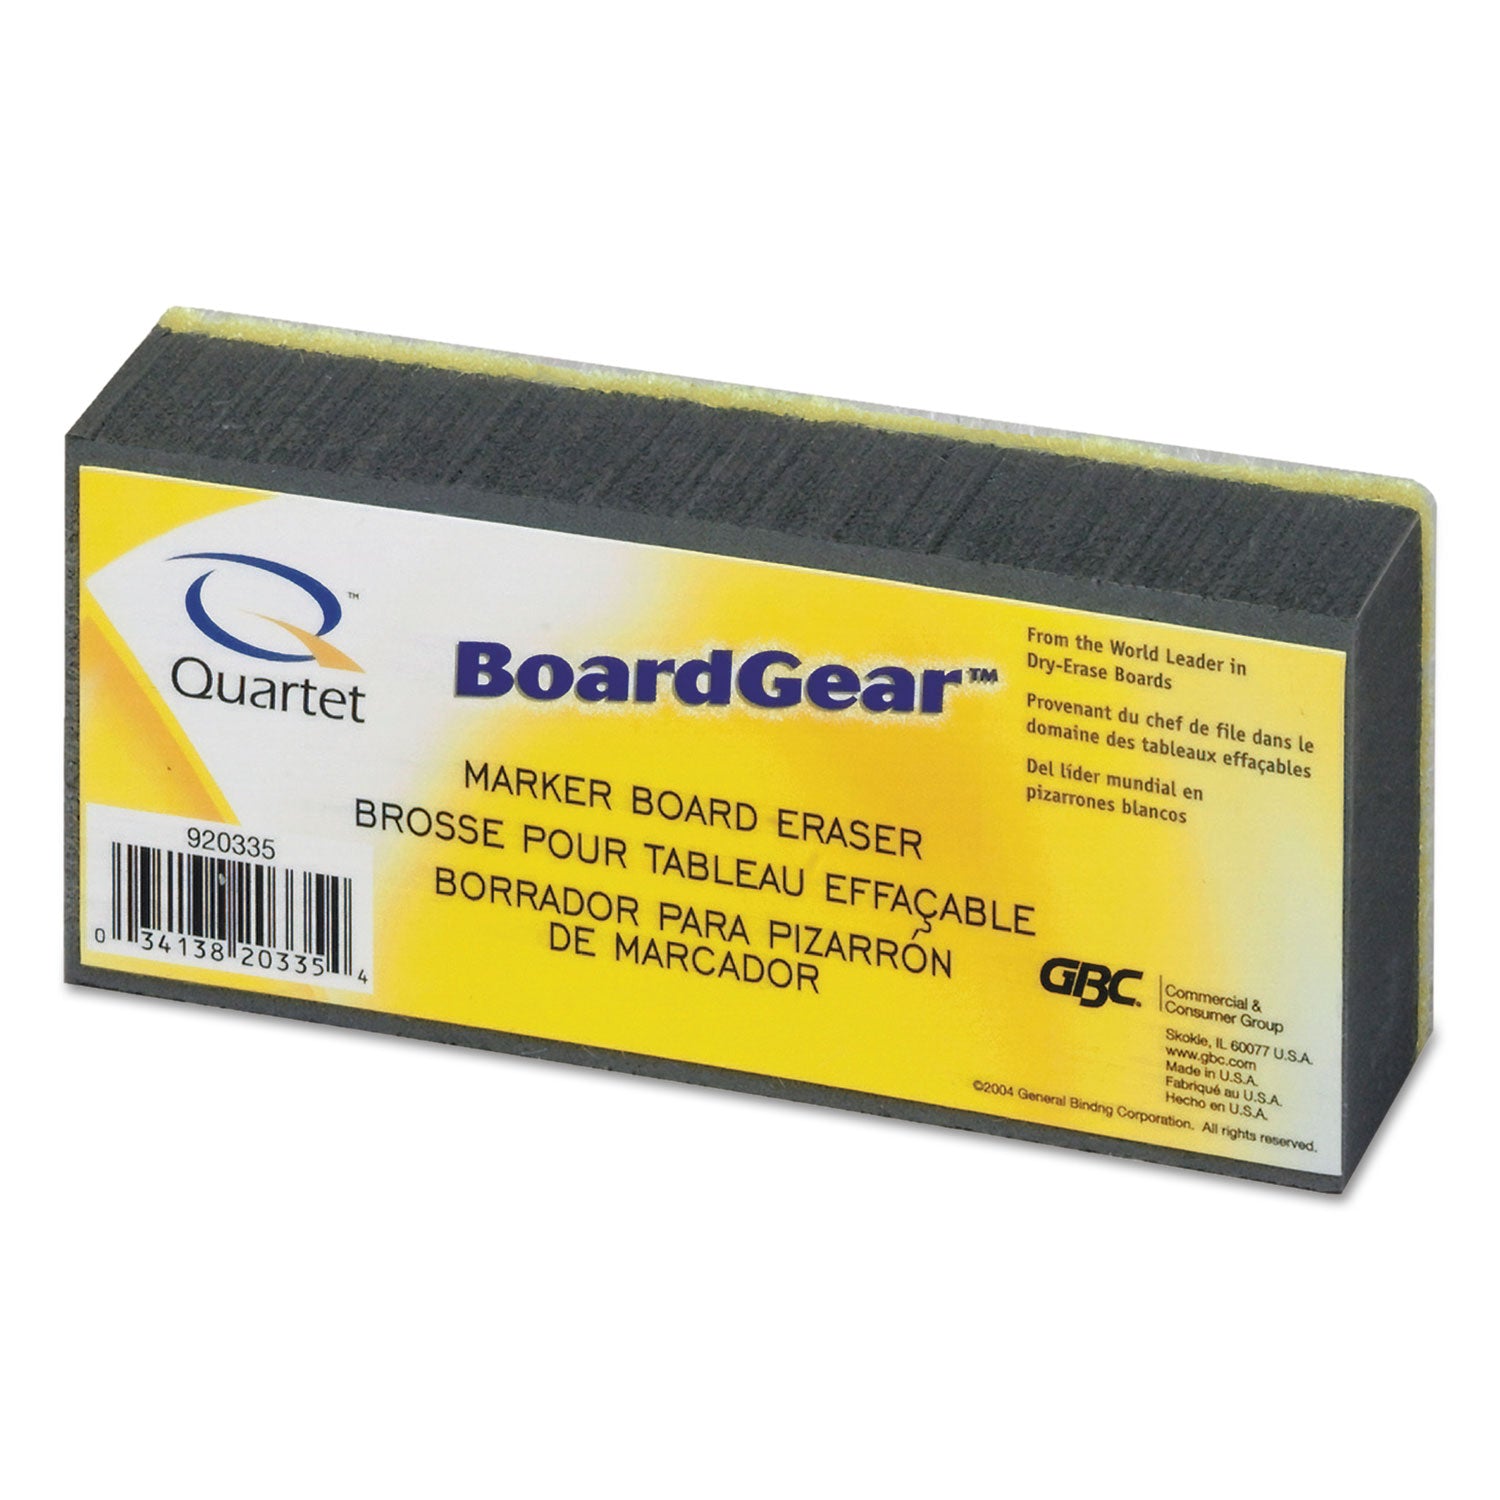 BoardGear Marker Board Eraser, 5" x 2.75" x 1.38 - 